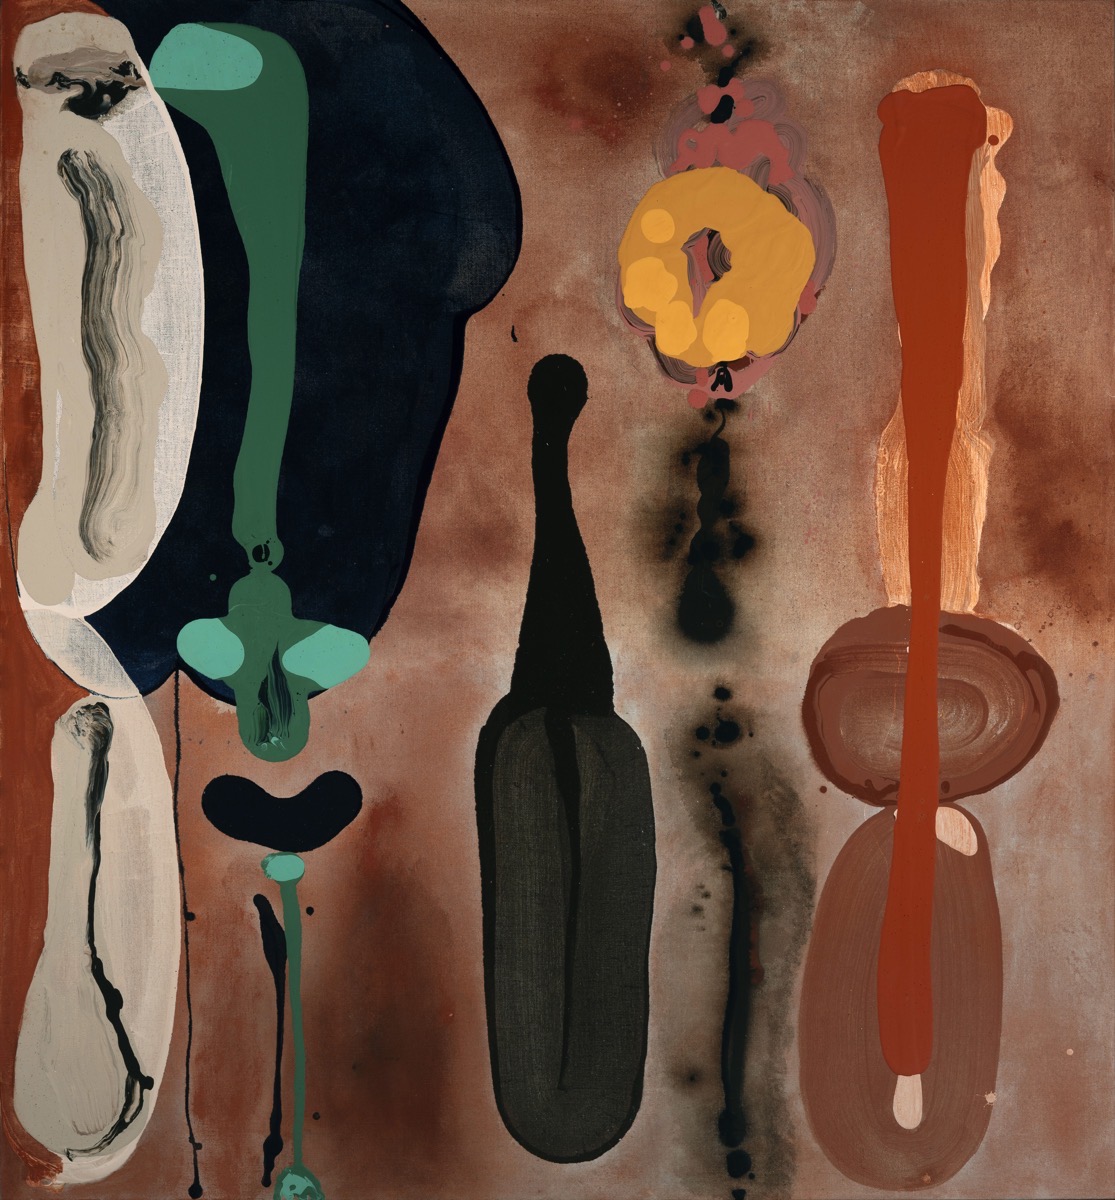 Horns and Strings by Louise Olsen at Olsen Gallery